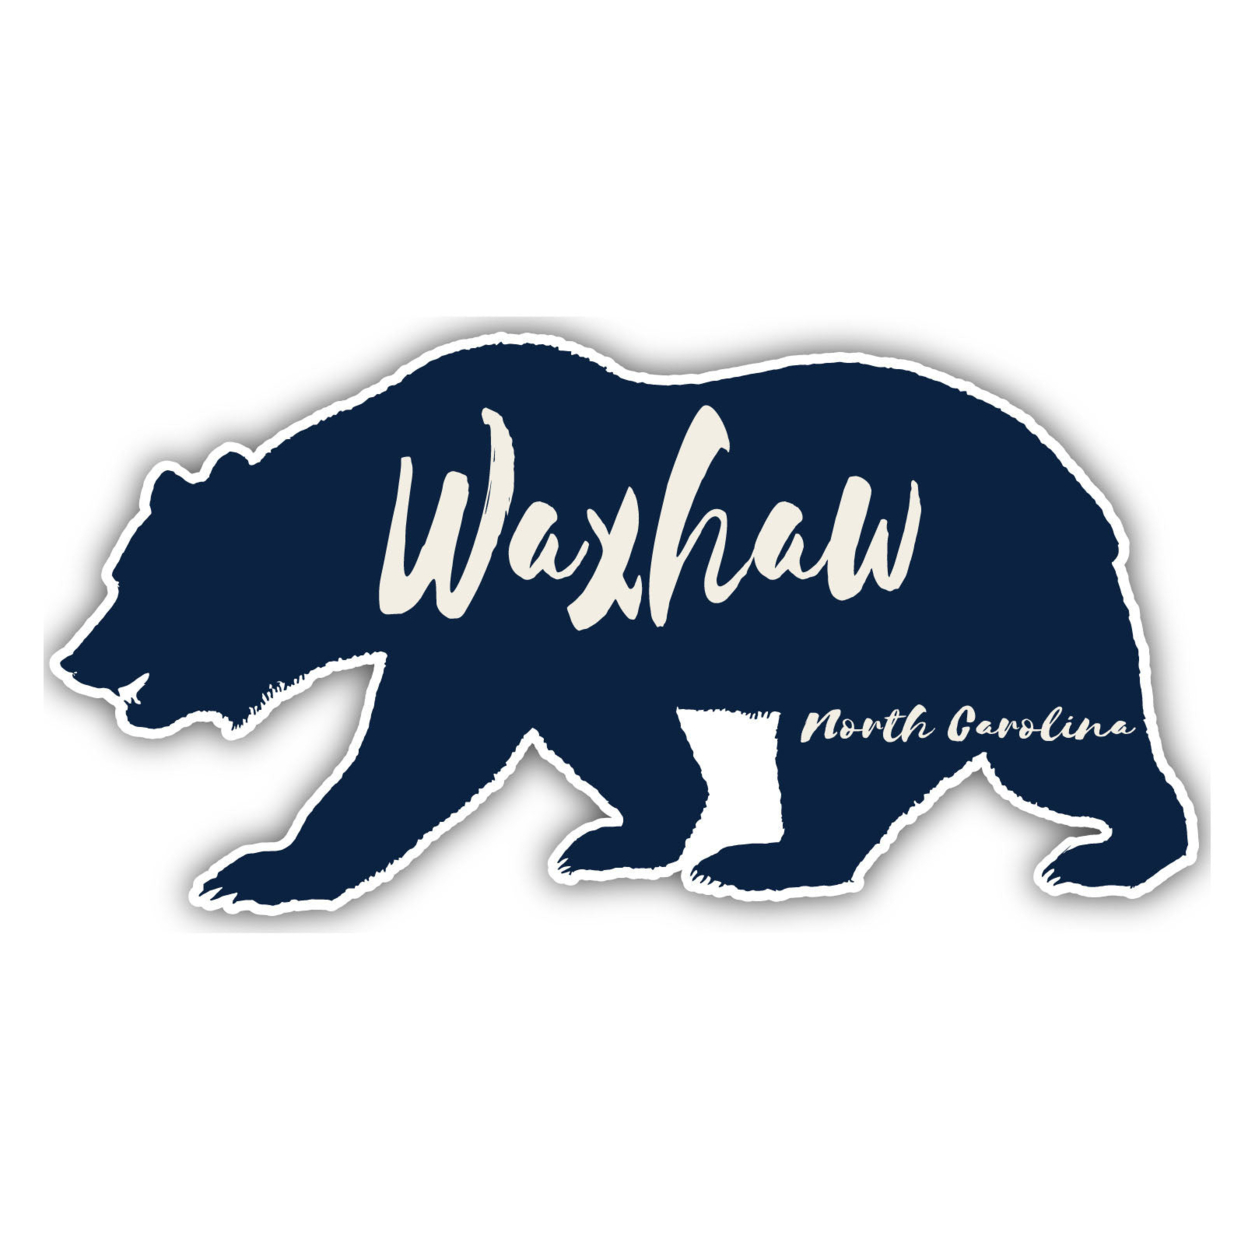 Waxhaw North Carolina Souvenir Decorative Stickers (Choose Theme And Size) - Single Unit, 2-Inch, Bear